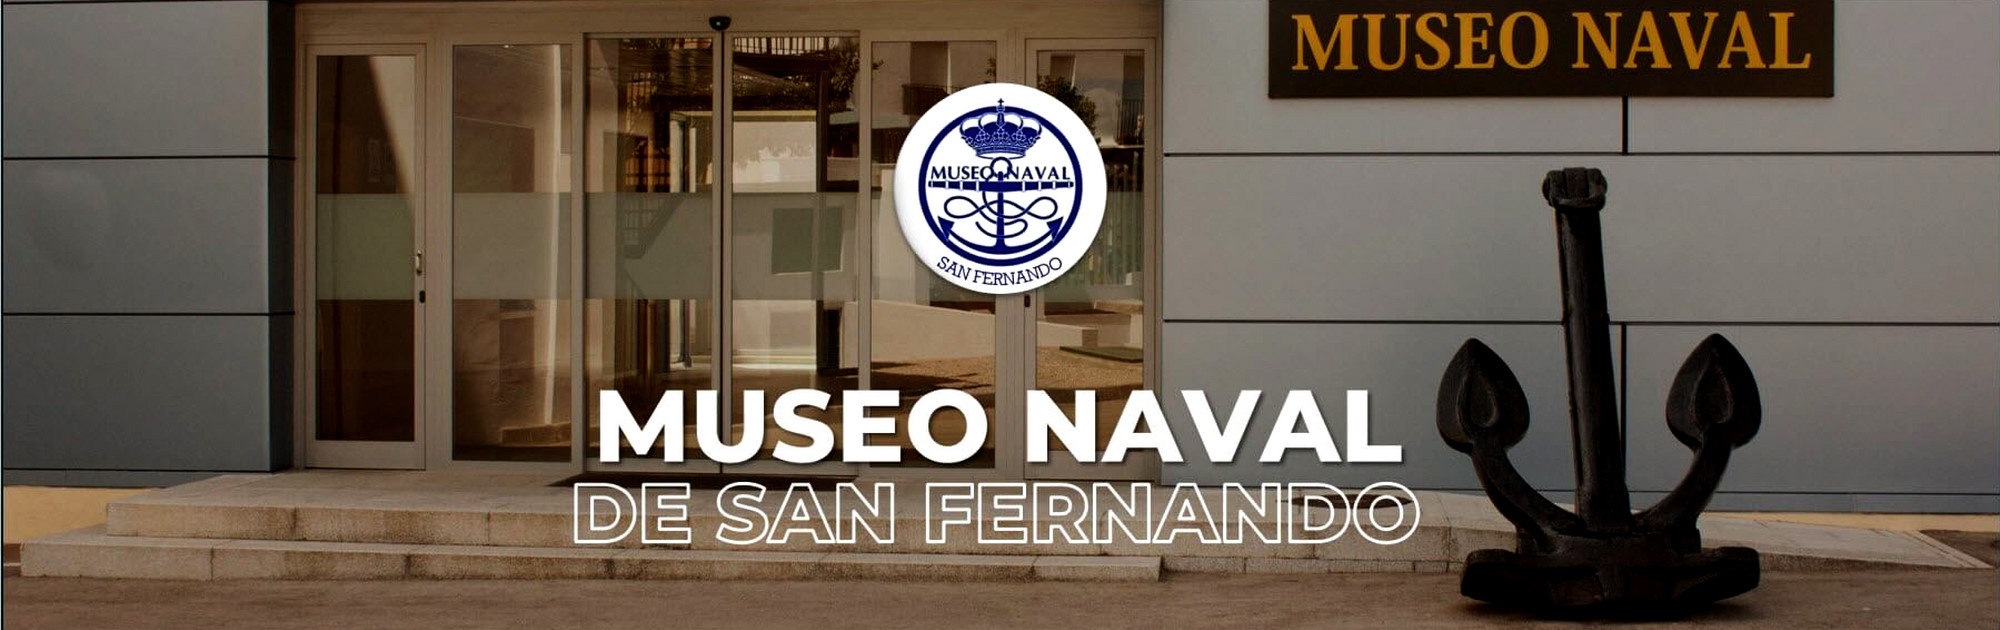 MUSEO NAVAL DE SAN FERNANDO		San Fernando	Cádiz